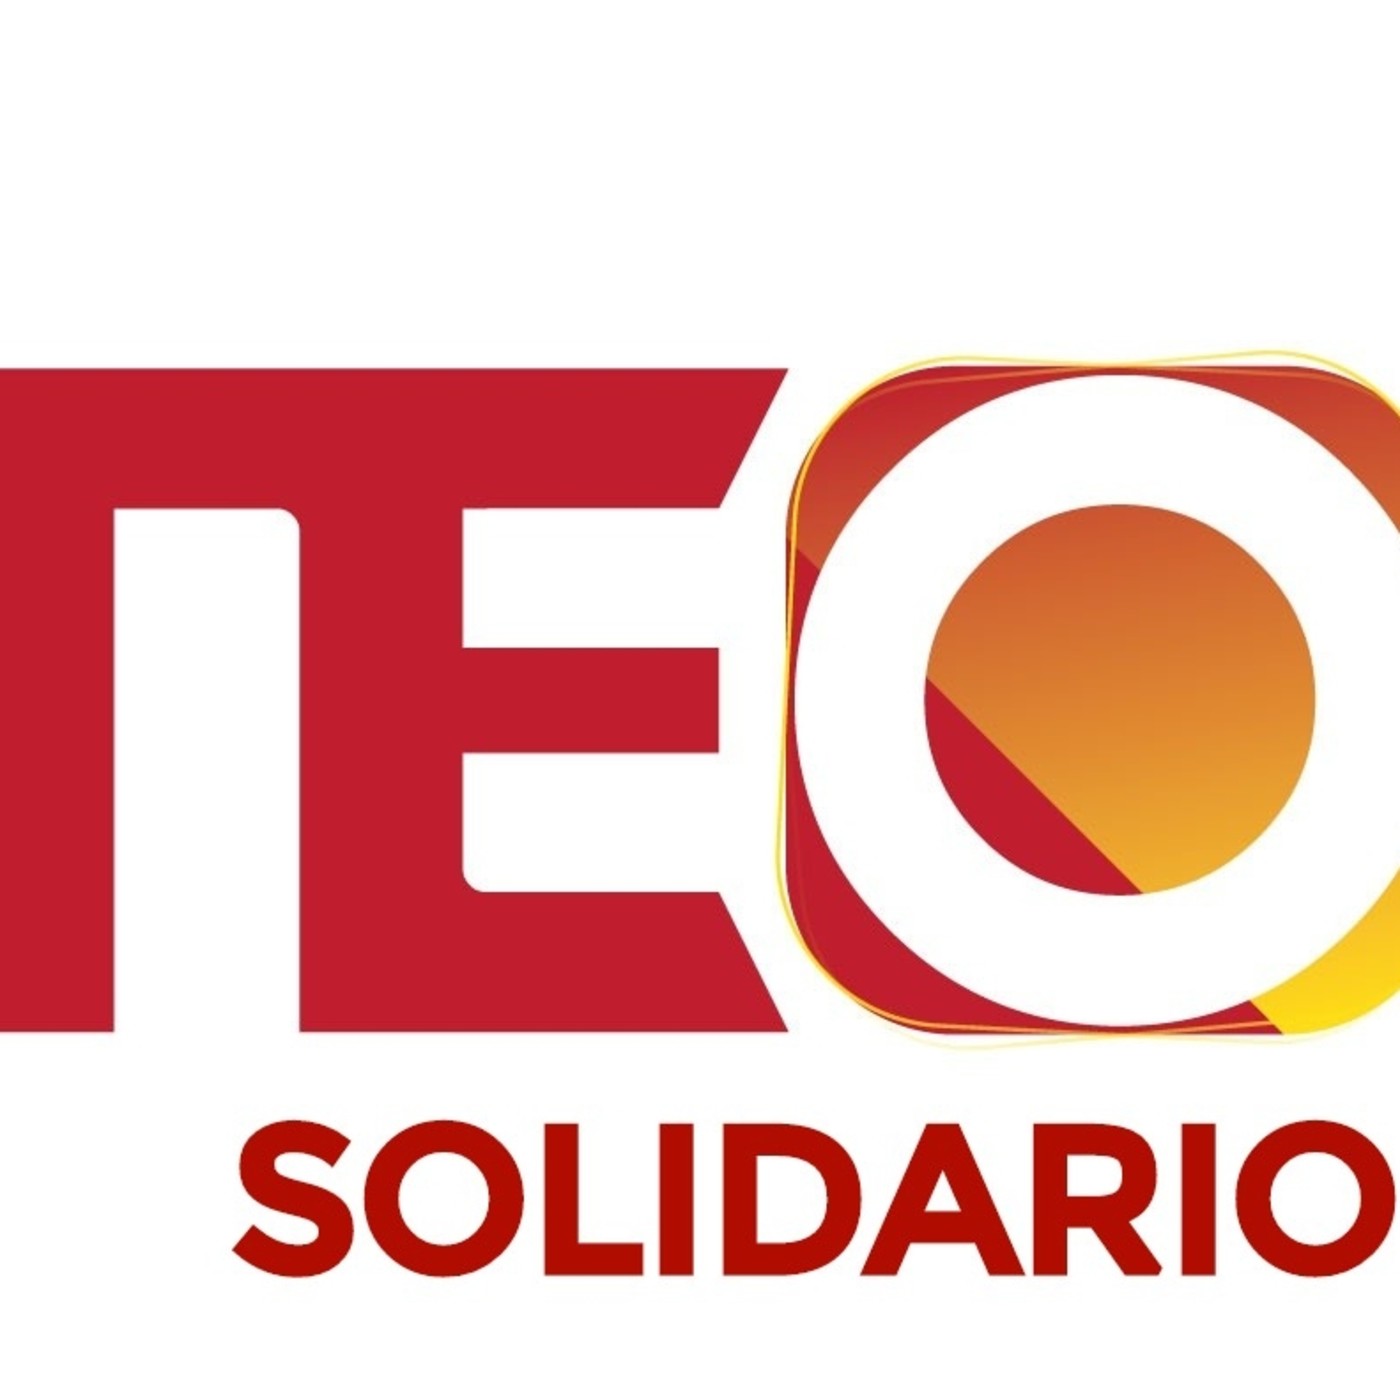 Neo FM Solidario